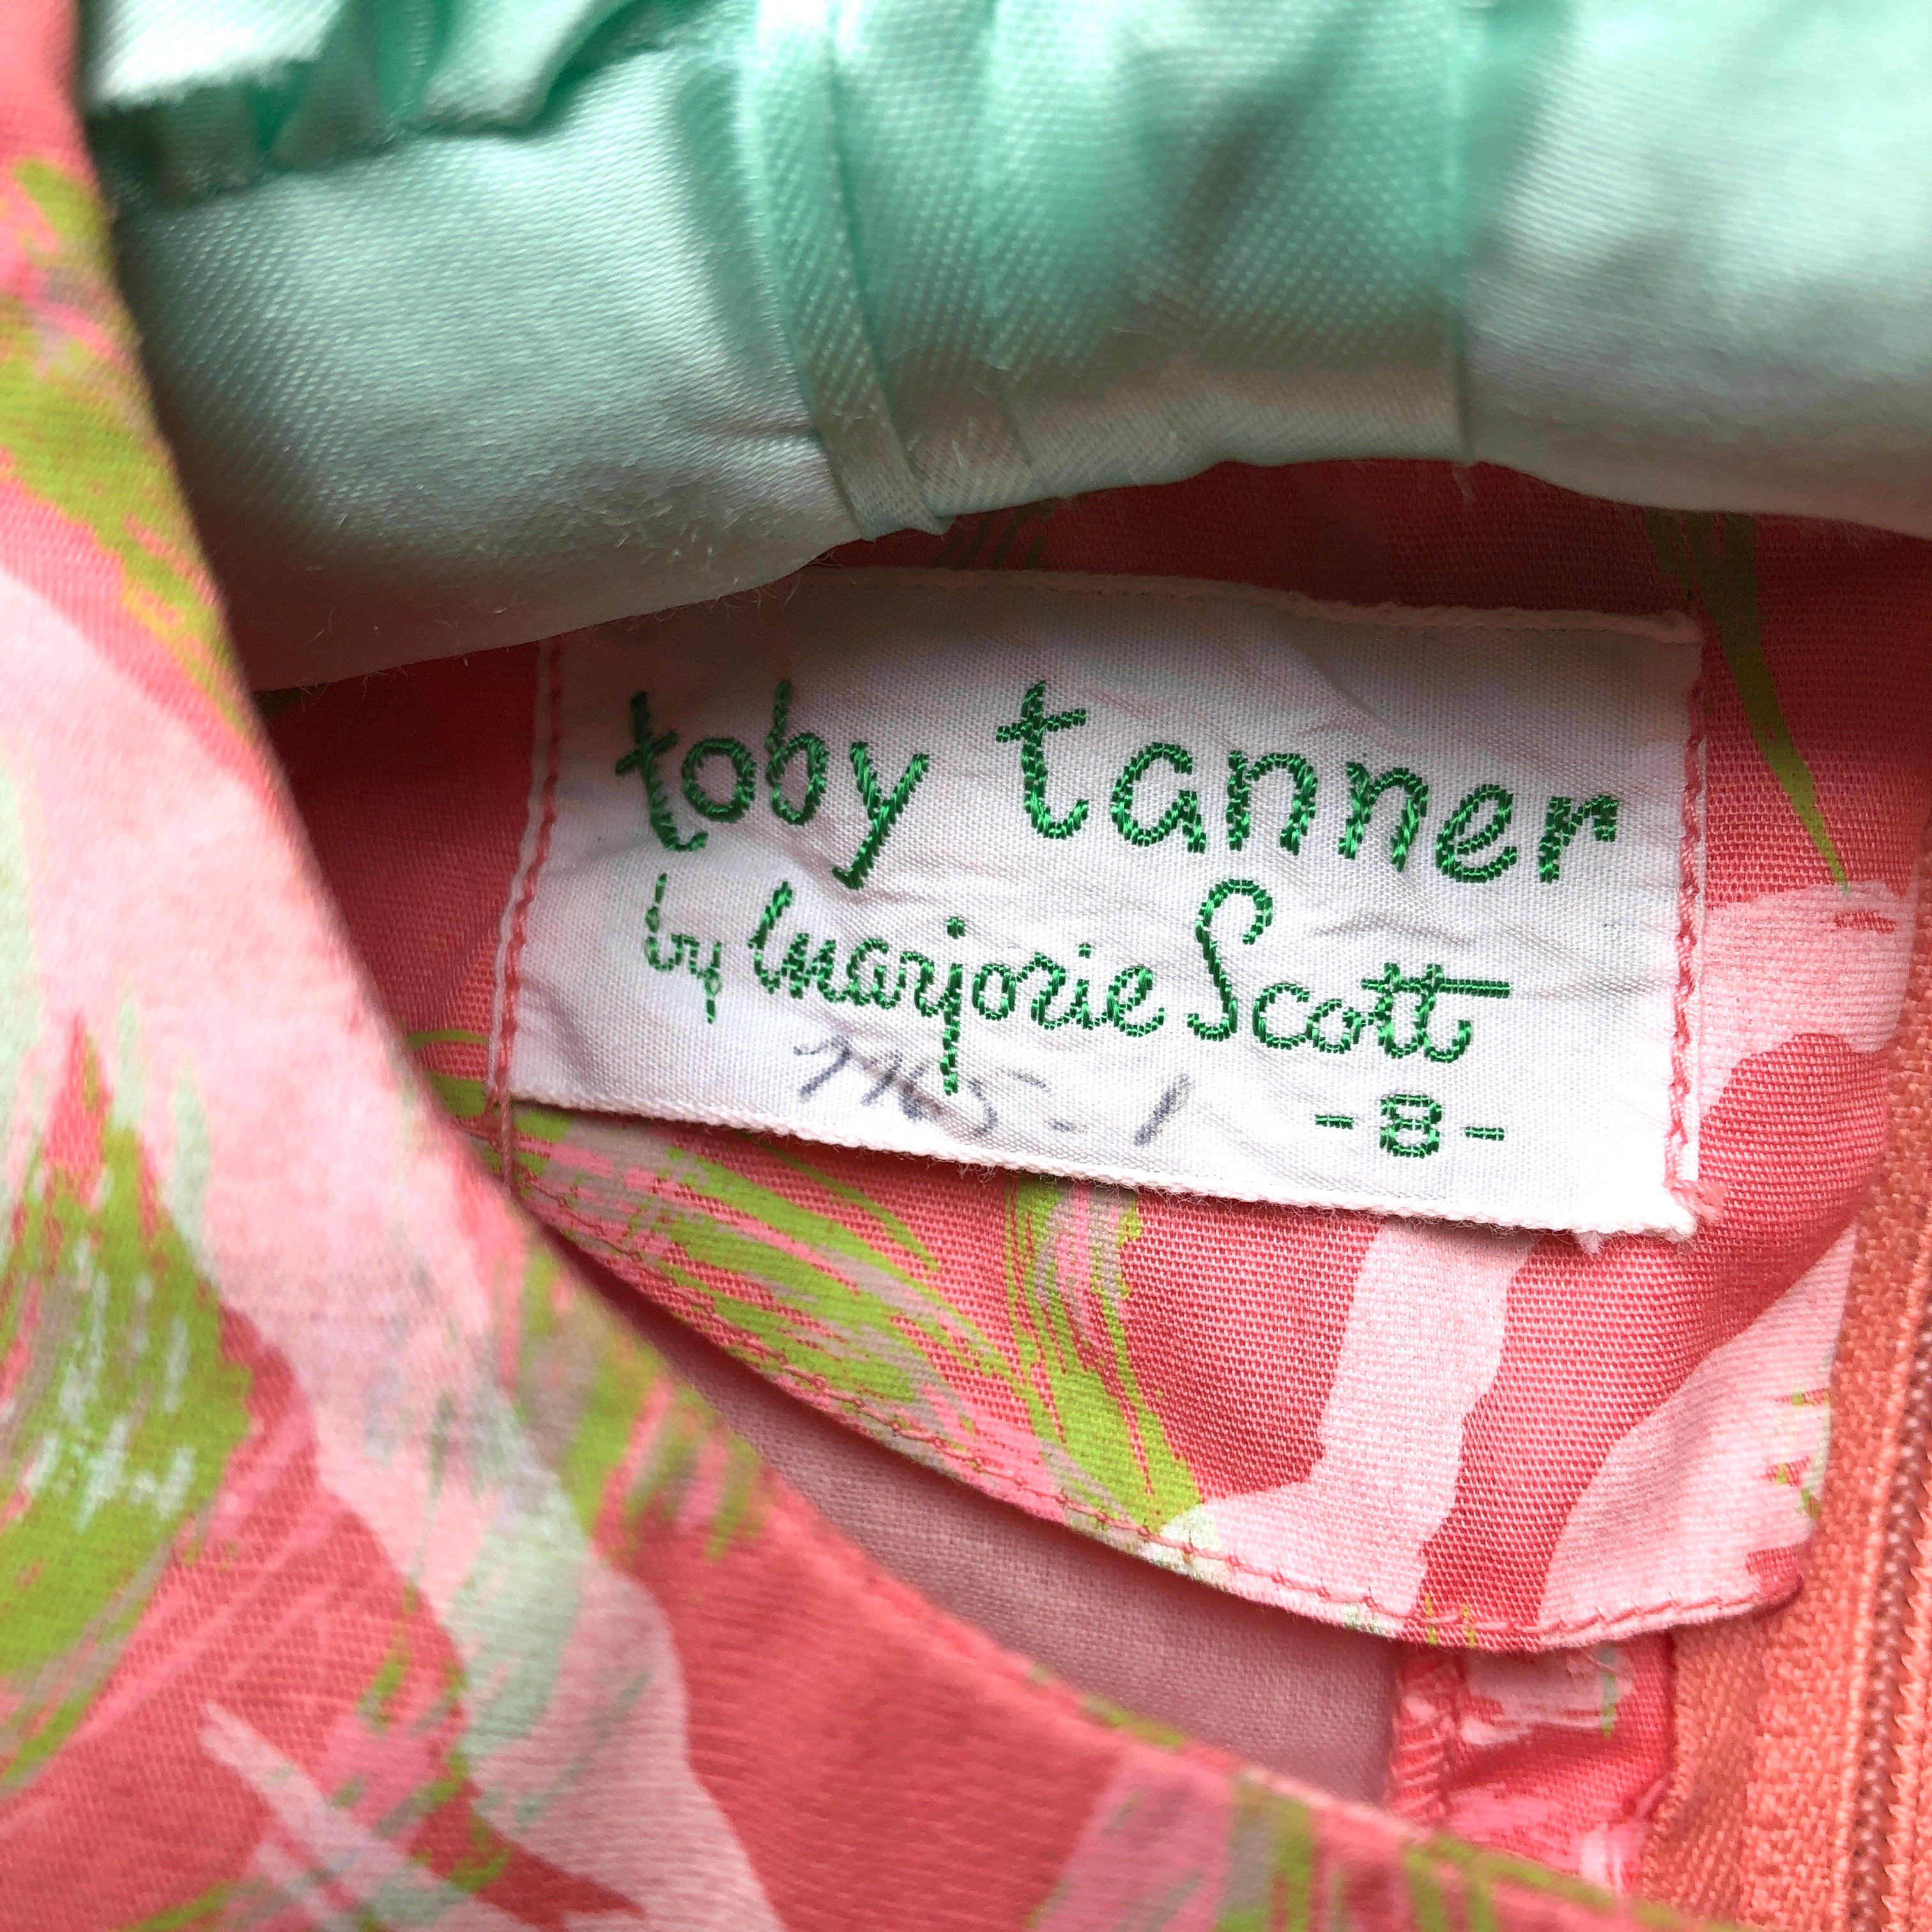 1970’s Toby Tanner by Marjorie Scott Cotton Floral Maxi Dress, Size XS